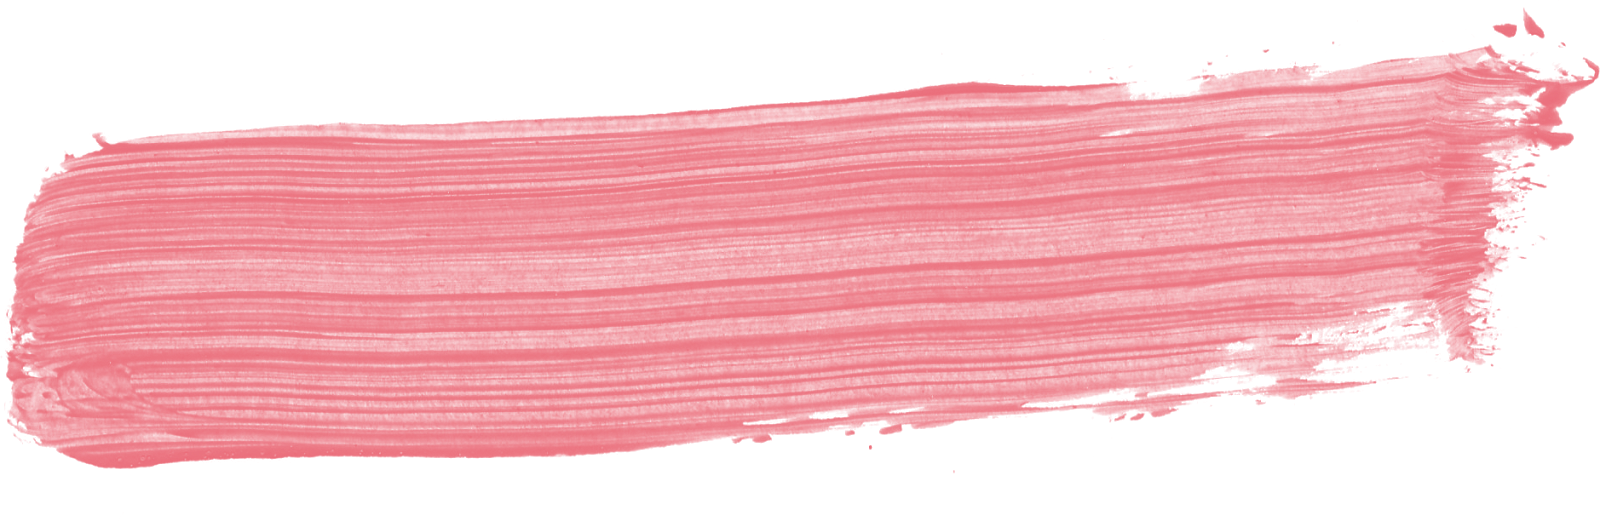 Sb Brush Stroke Pink - Paint Brush Stroke Png (1600x521), Png Download